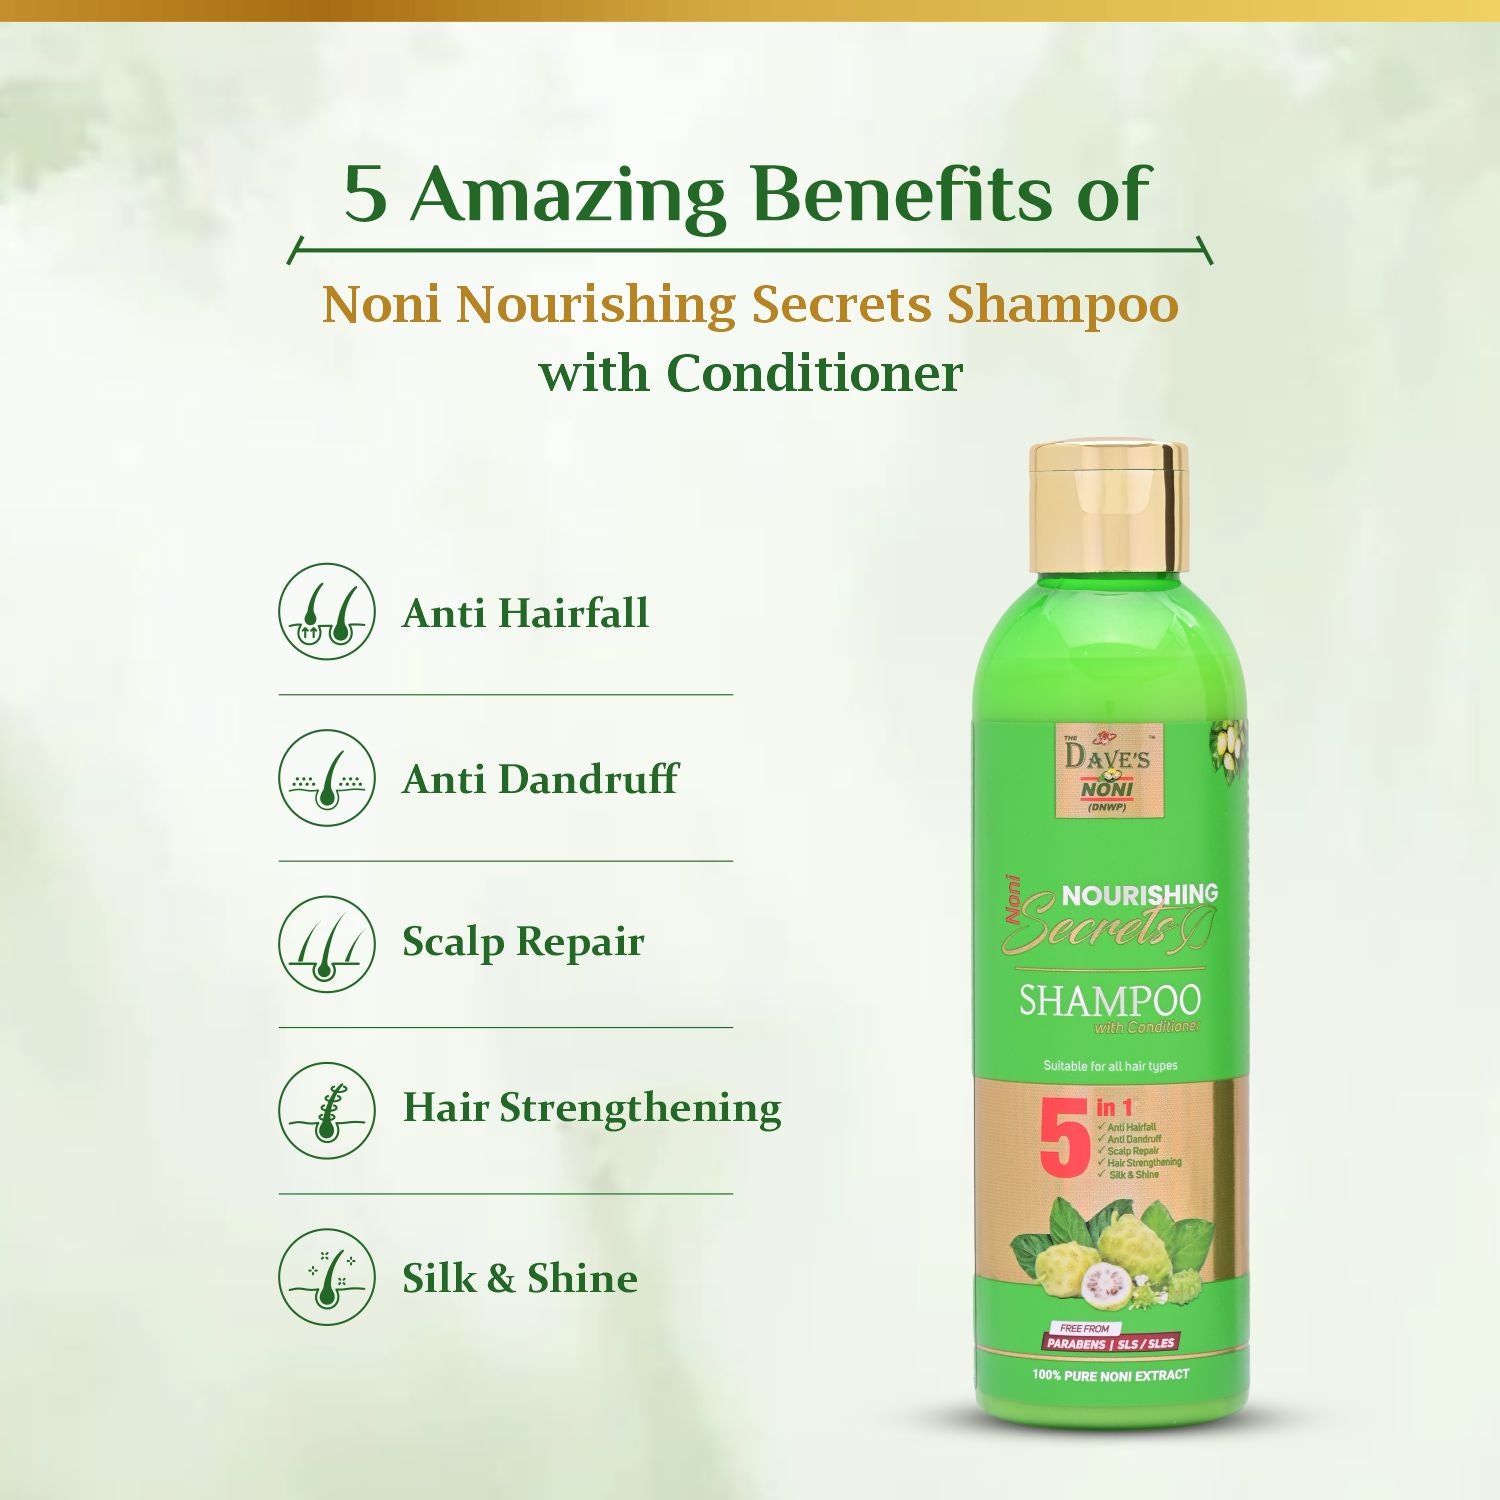 Benefits of Noni Nourishing Secret Shampoo With Conditioner